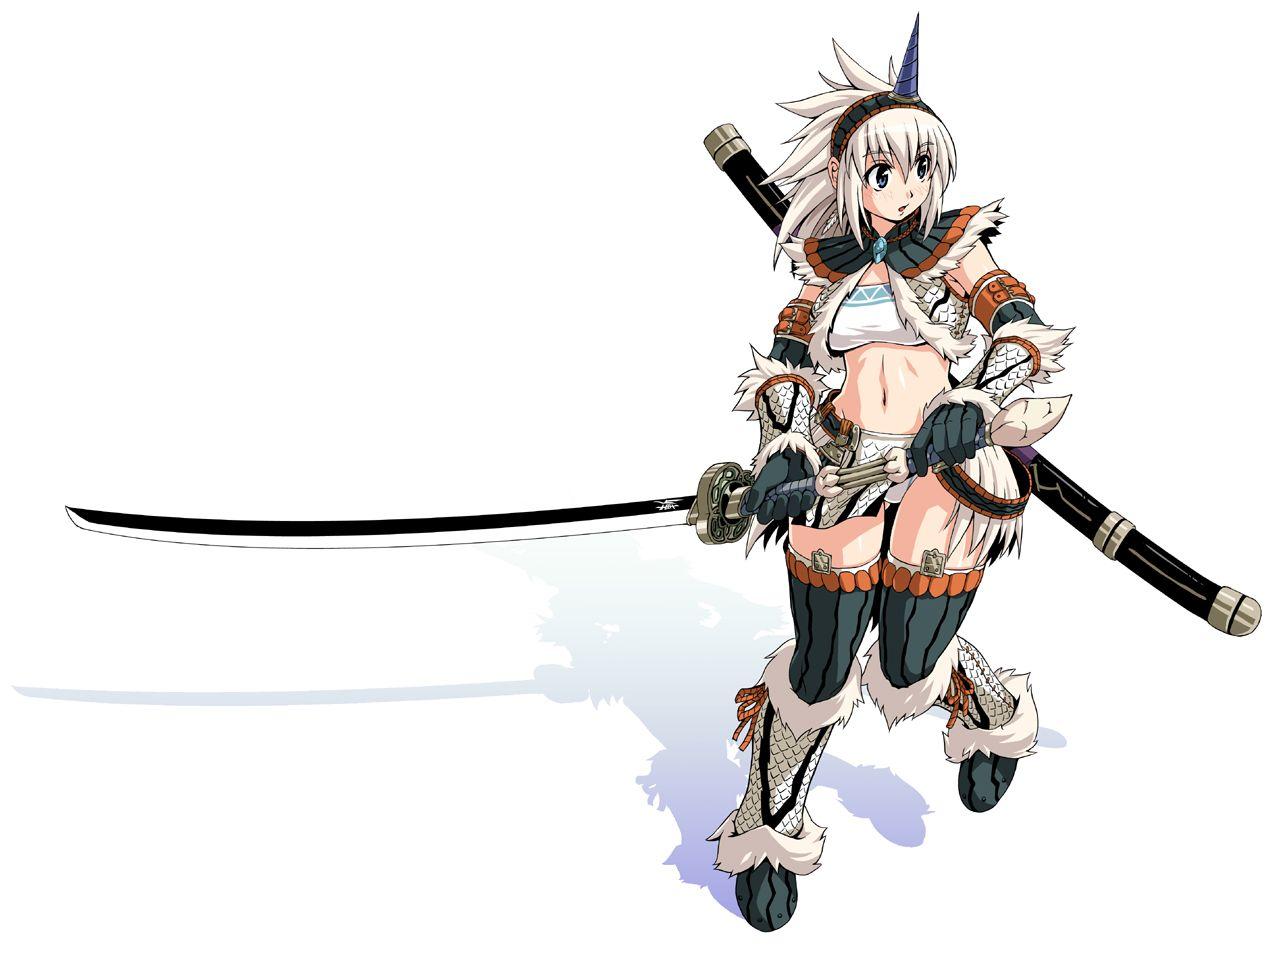 armor funamushi (funa) katana kirin monster hunter sword weapon